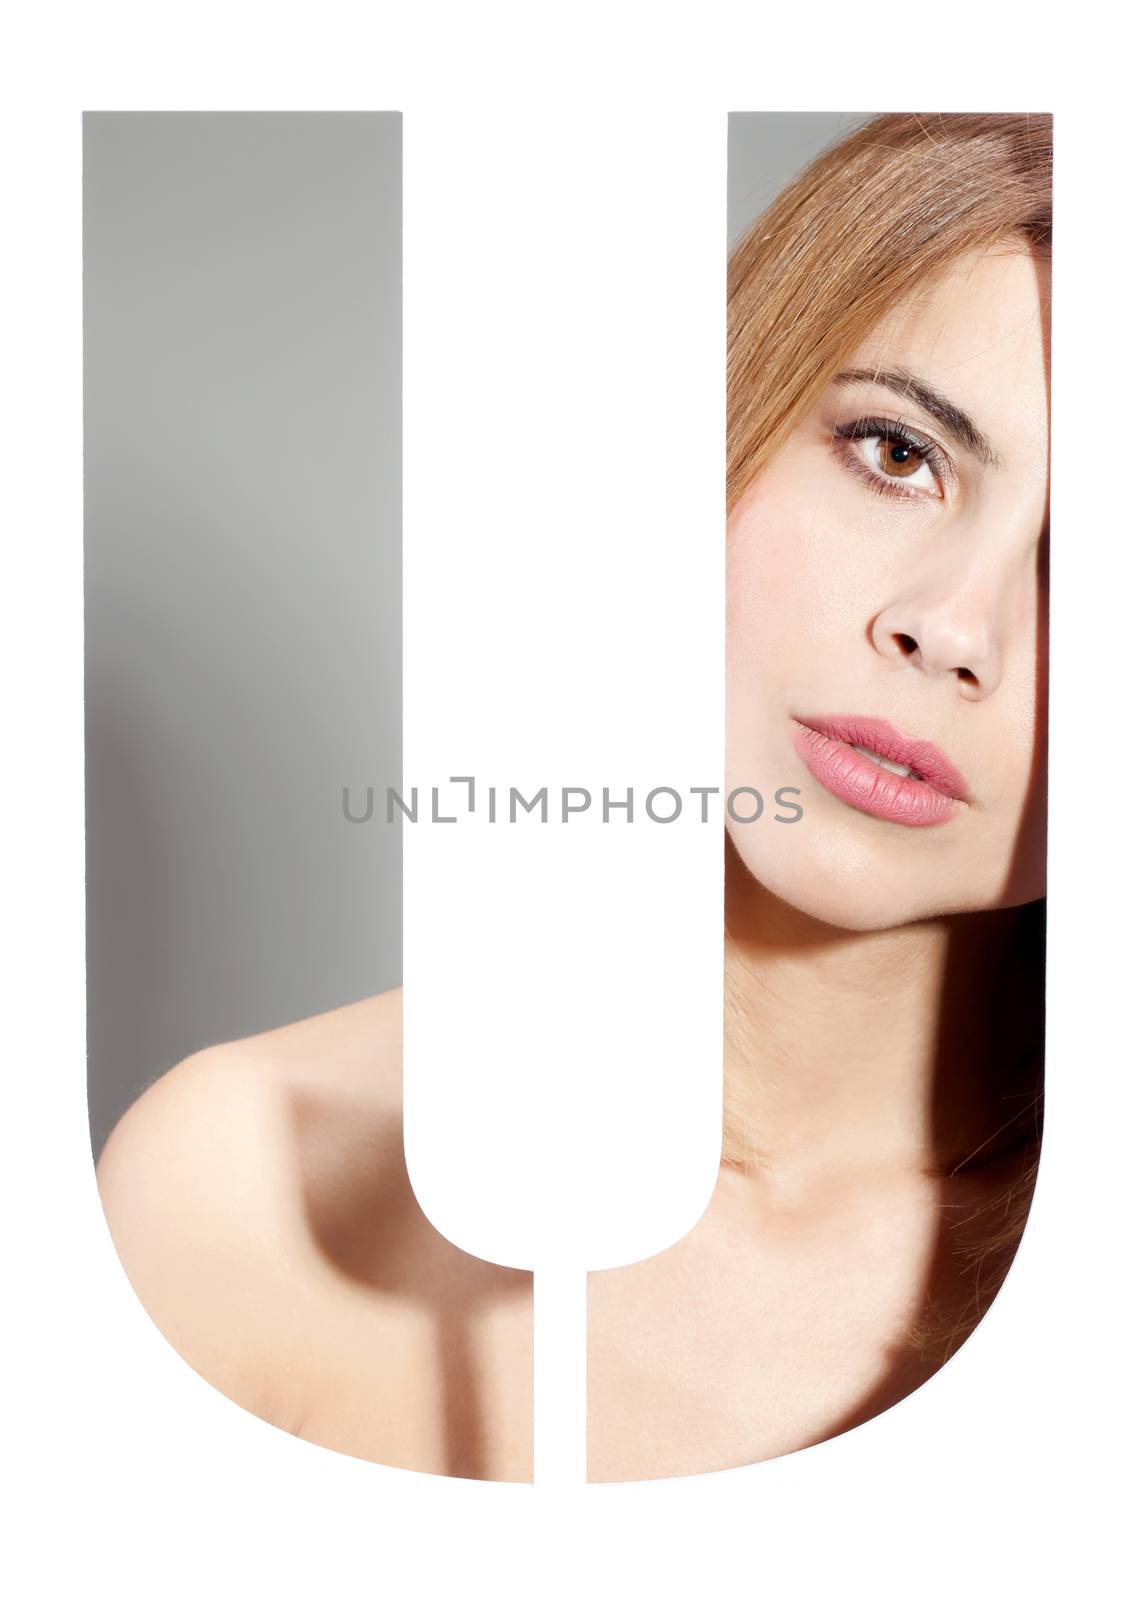 girl portrait behind the letter "U"